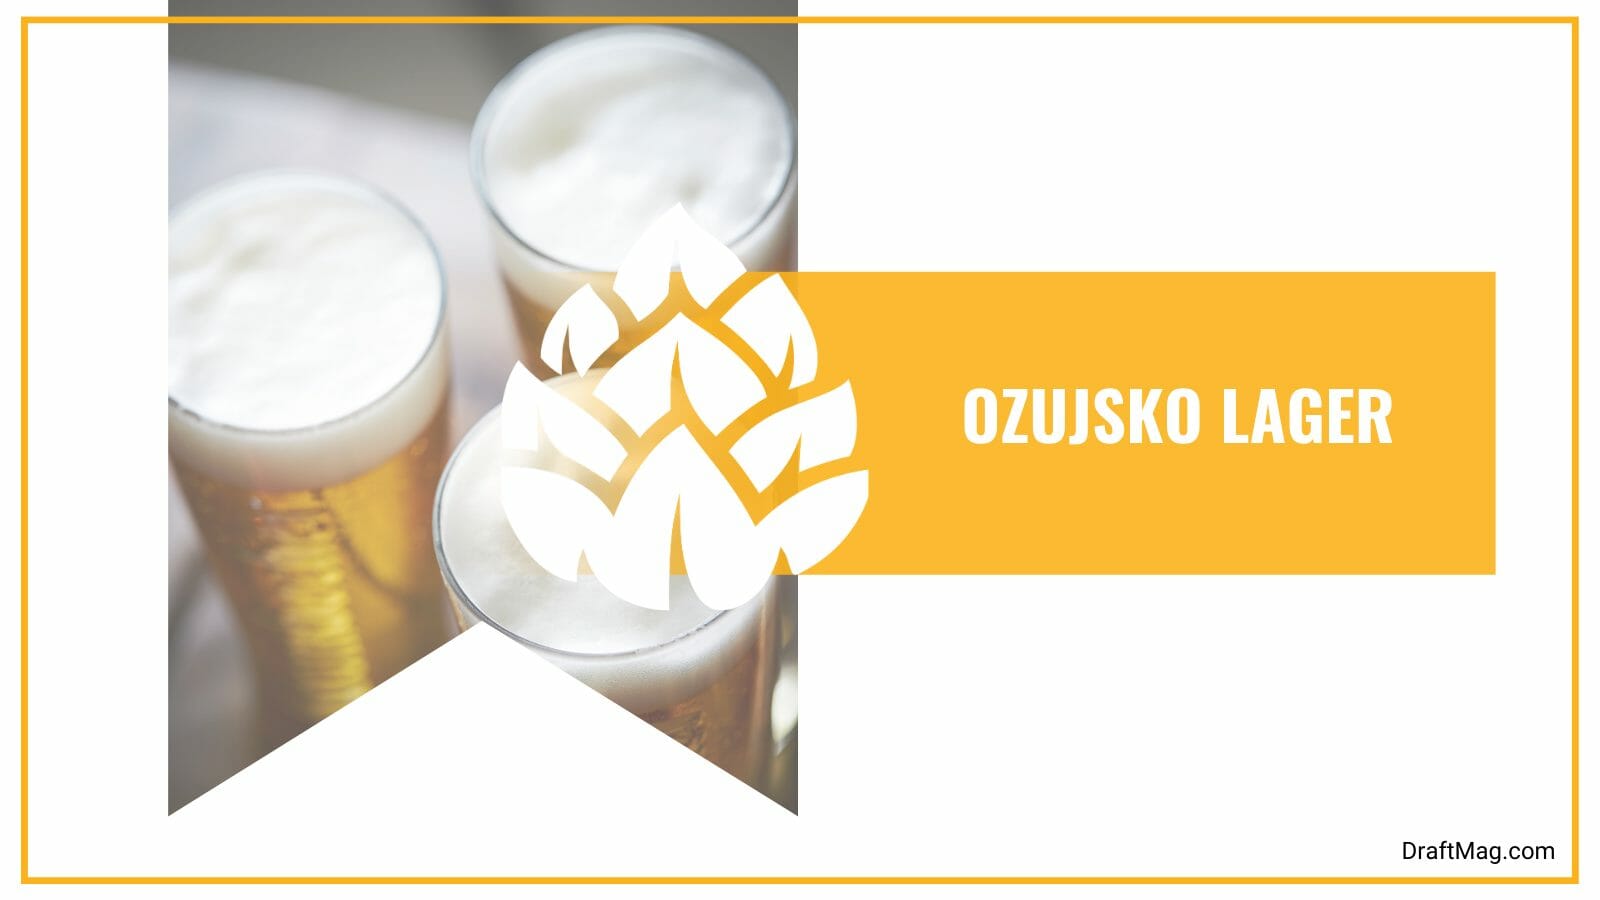 Ozujsko lager with corn aroma